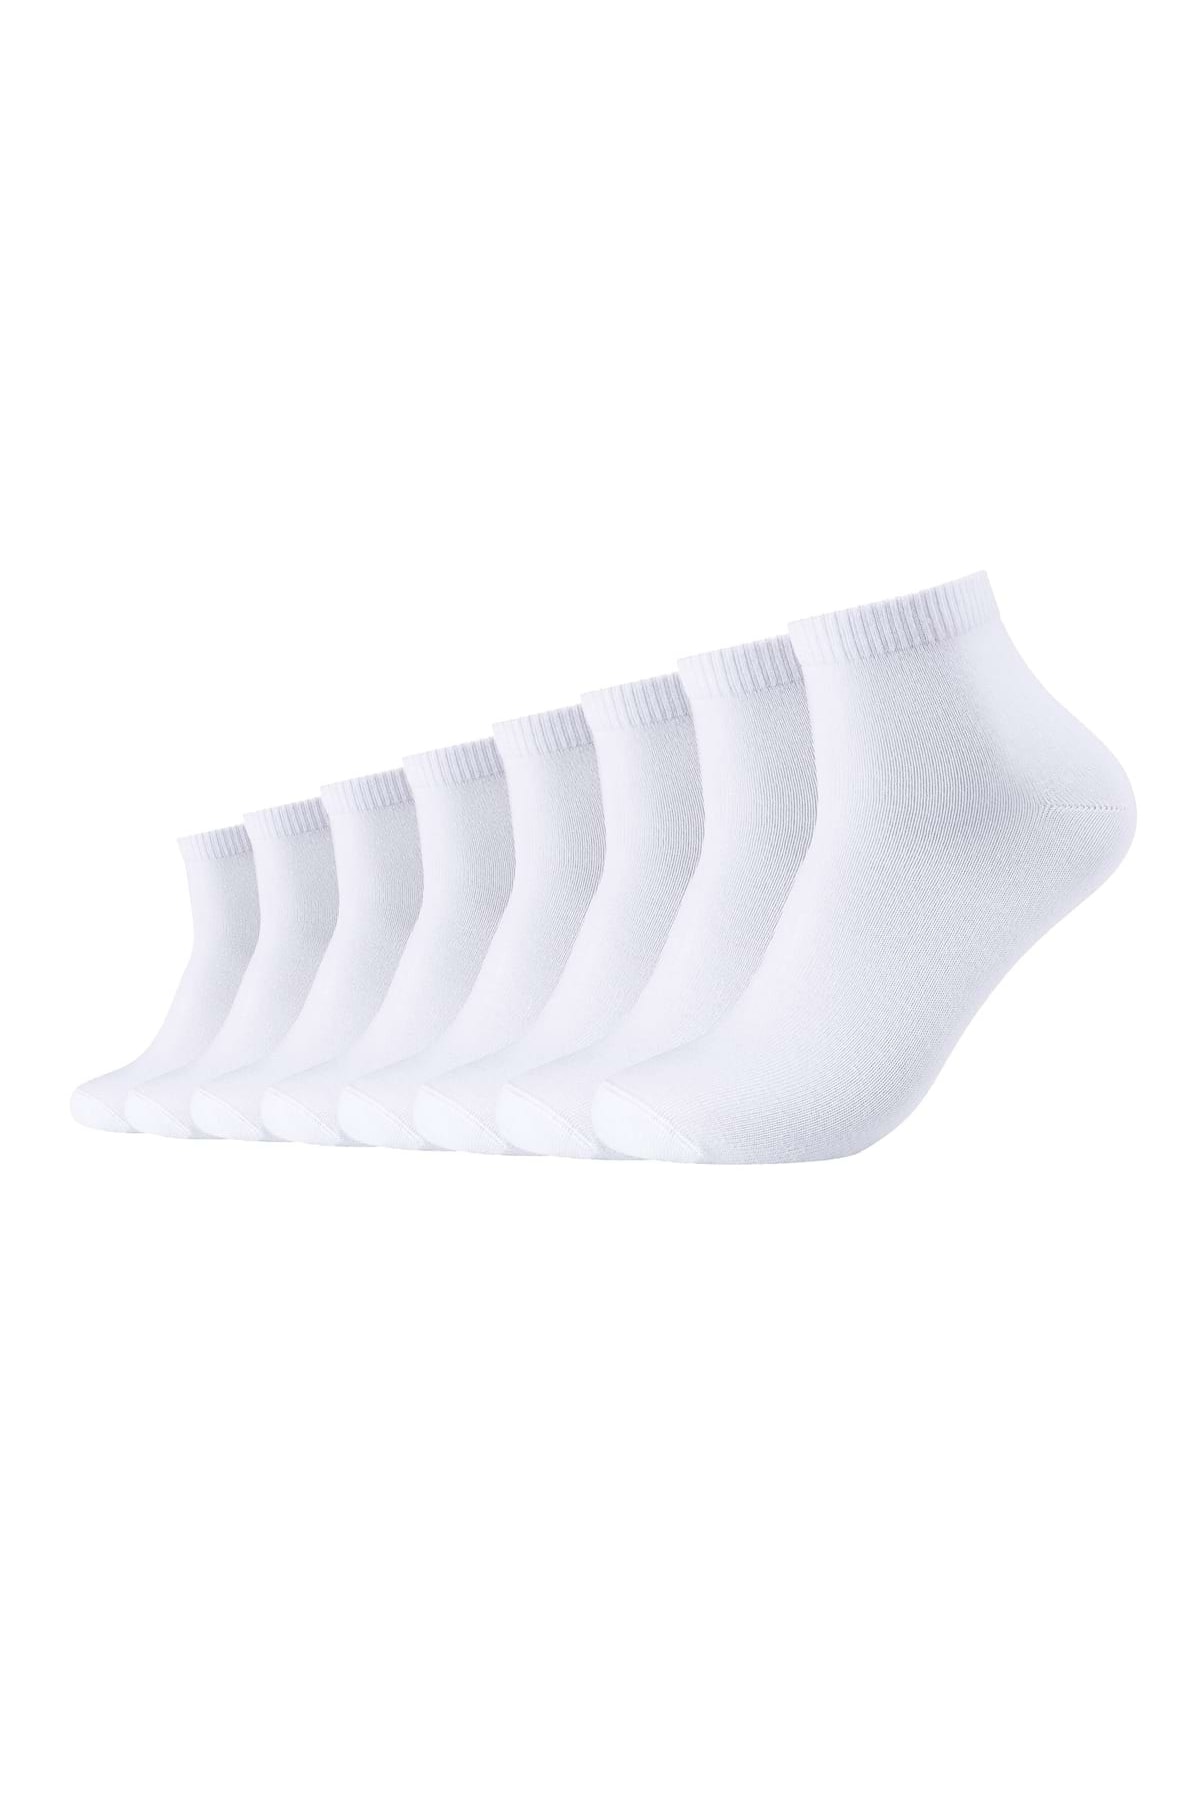 S. OLİVER Socken Weiß Casual